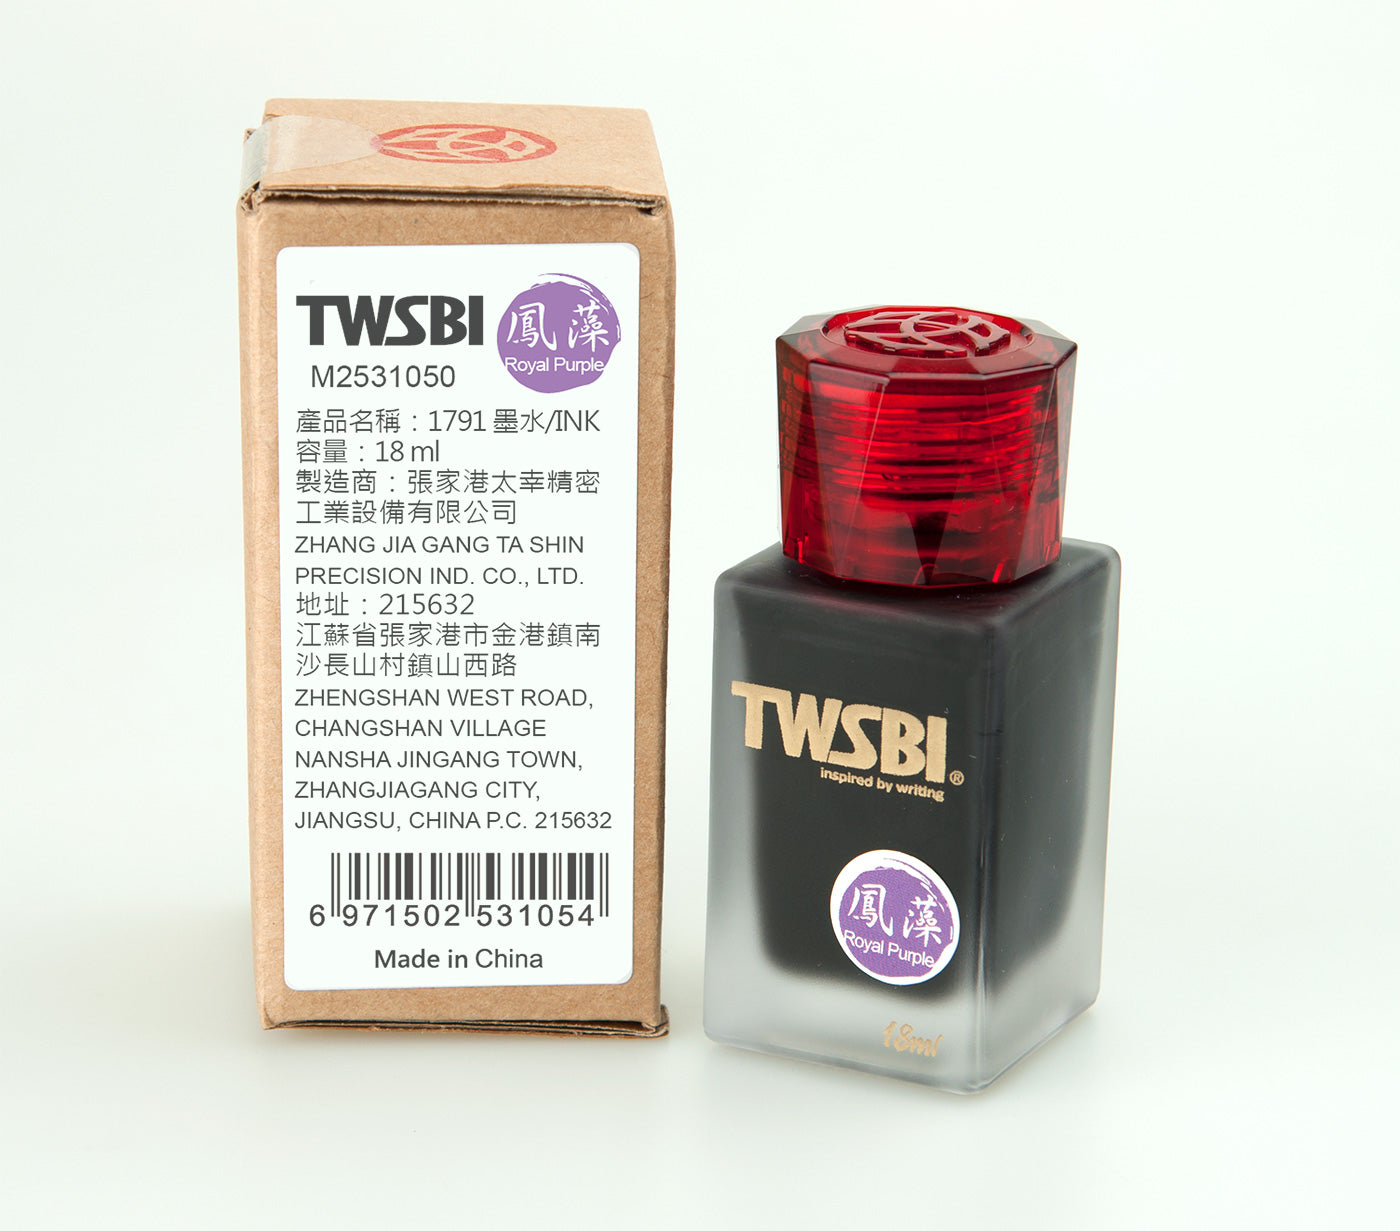 TWSBI 1791 Tinte - Royal Purple